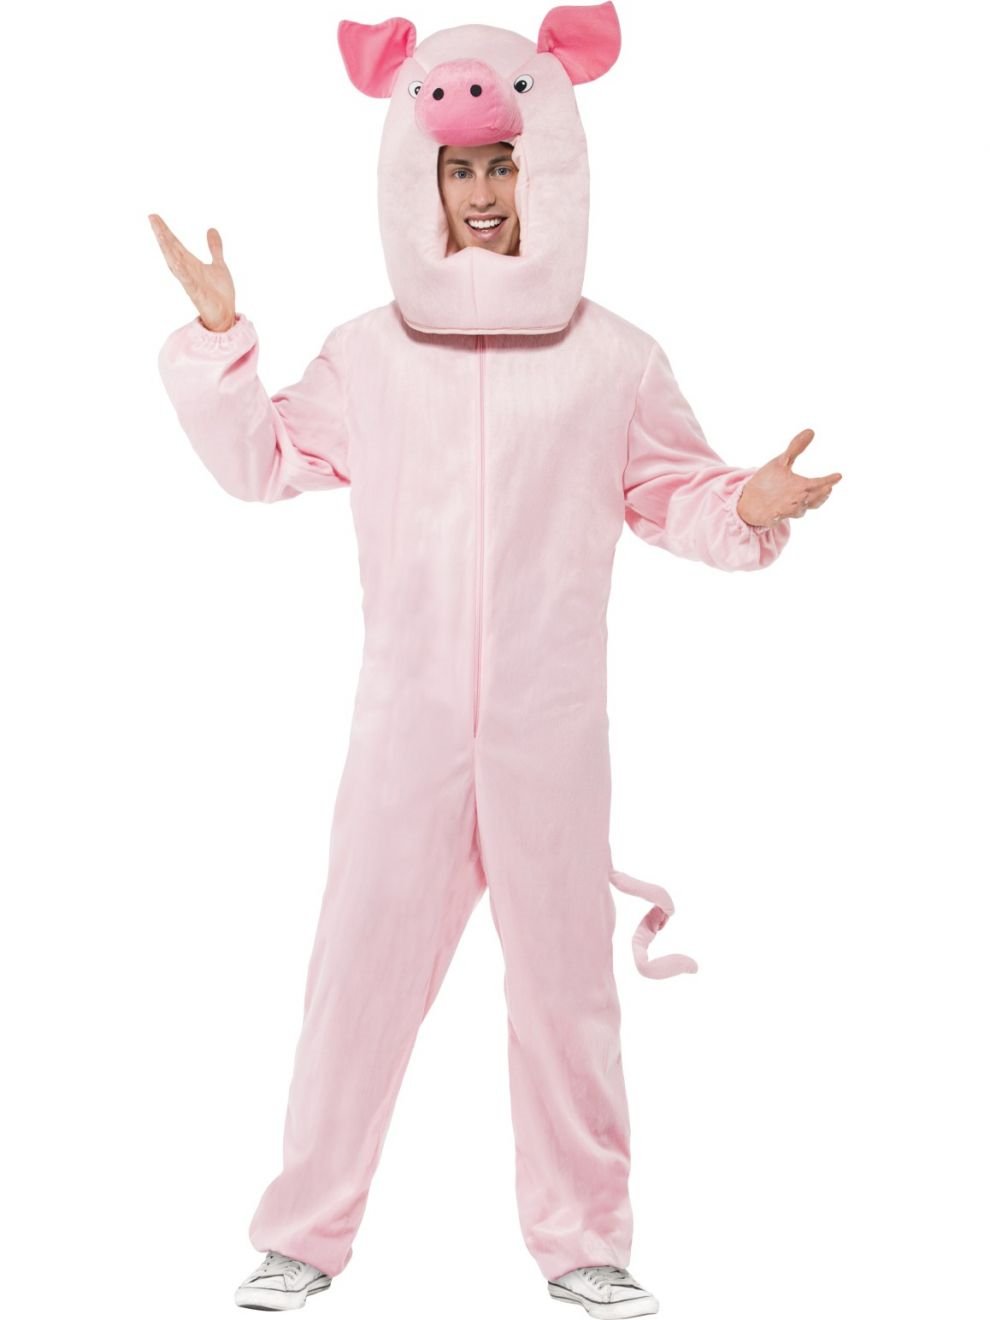 Costume Adult Pig Pink Large